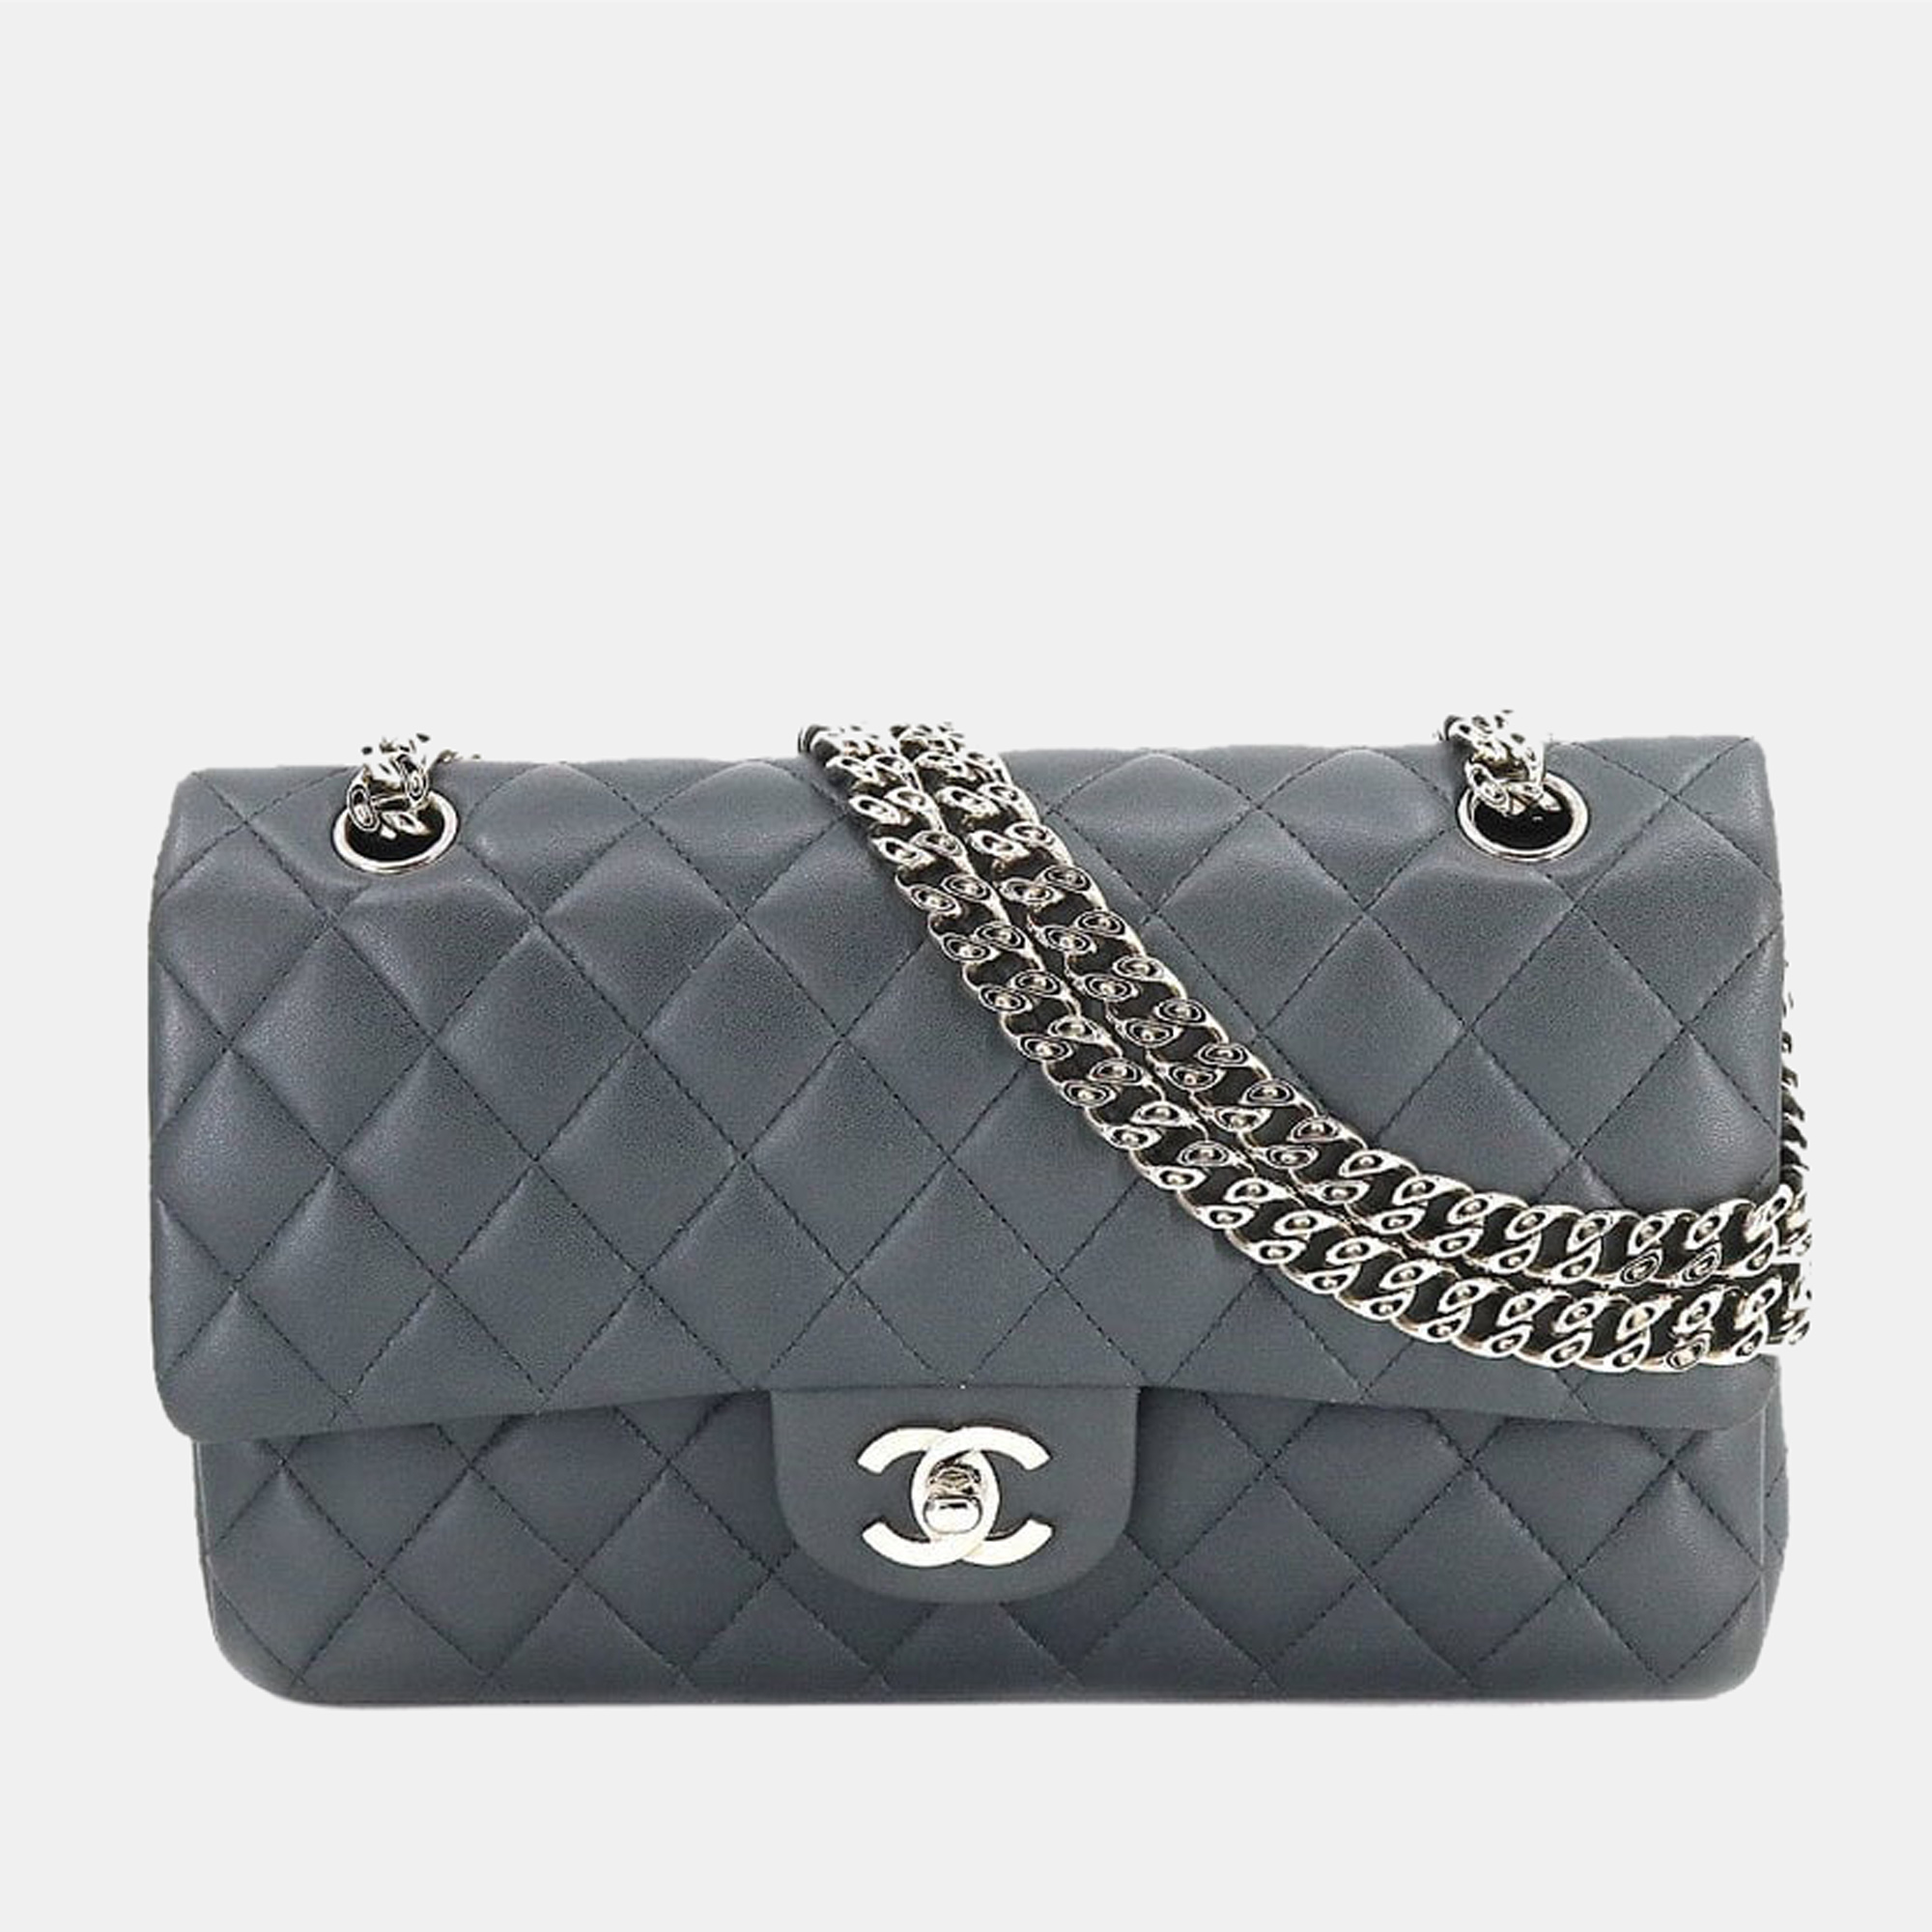 Chanel Grey Leather Medium Classic Double Flap Shoulder Bag